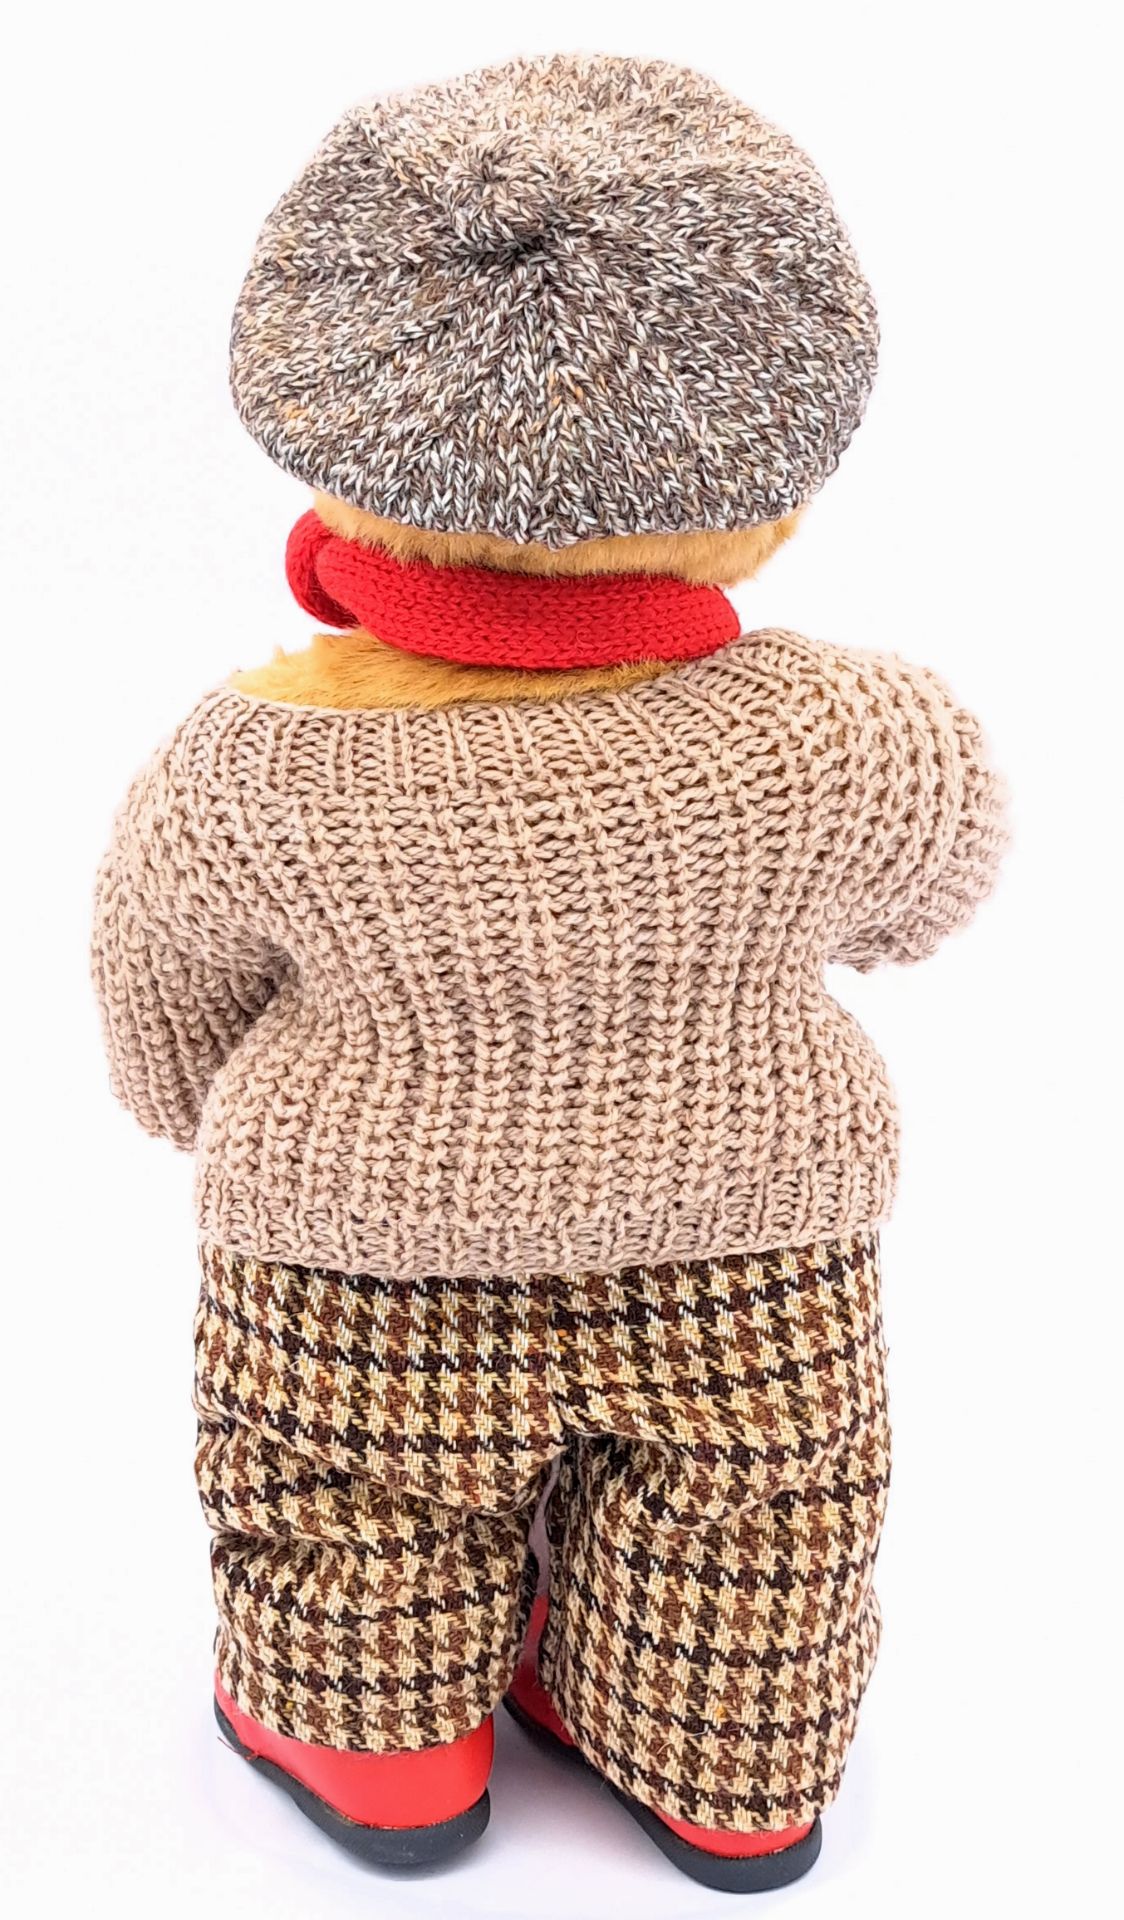 Little Folk Lakeland Bears (UK) vintage teddy bear - Image 2 of 2